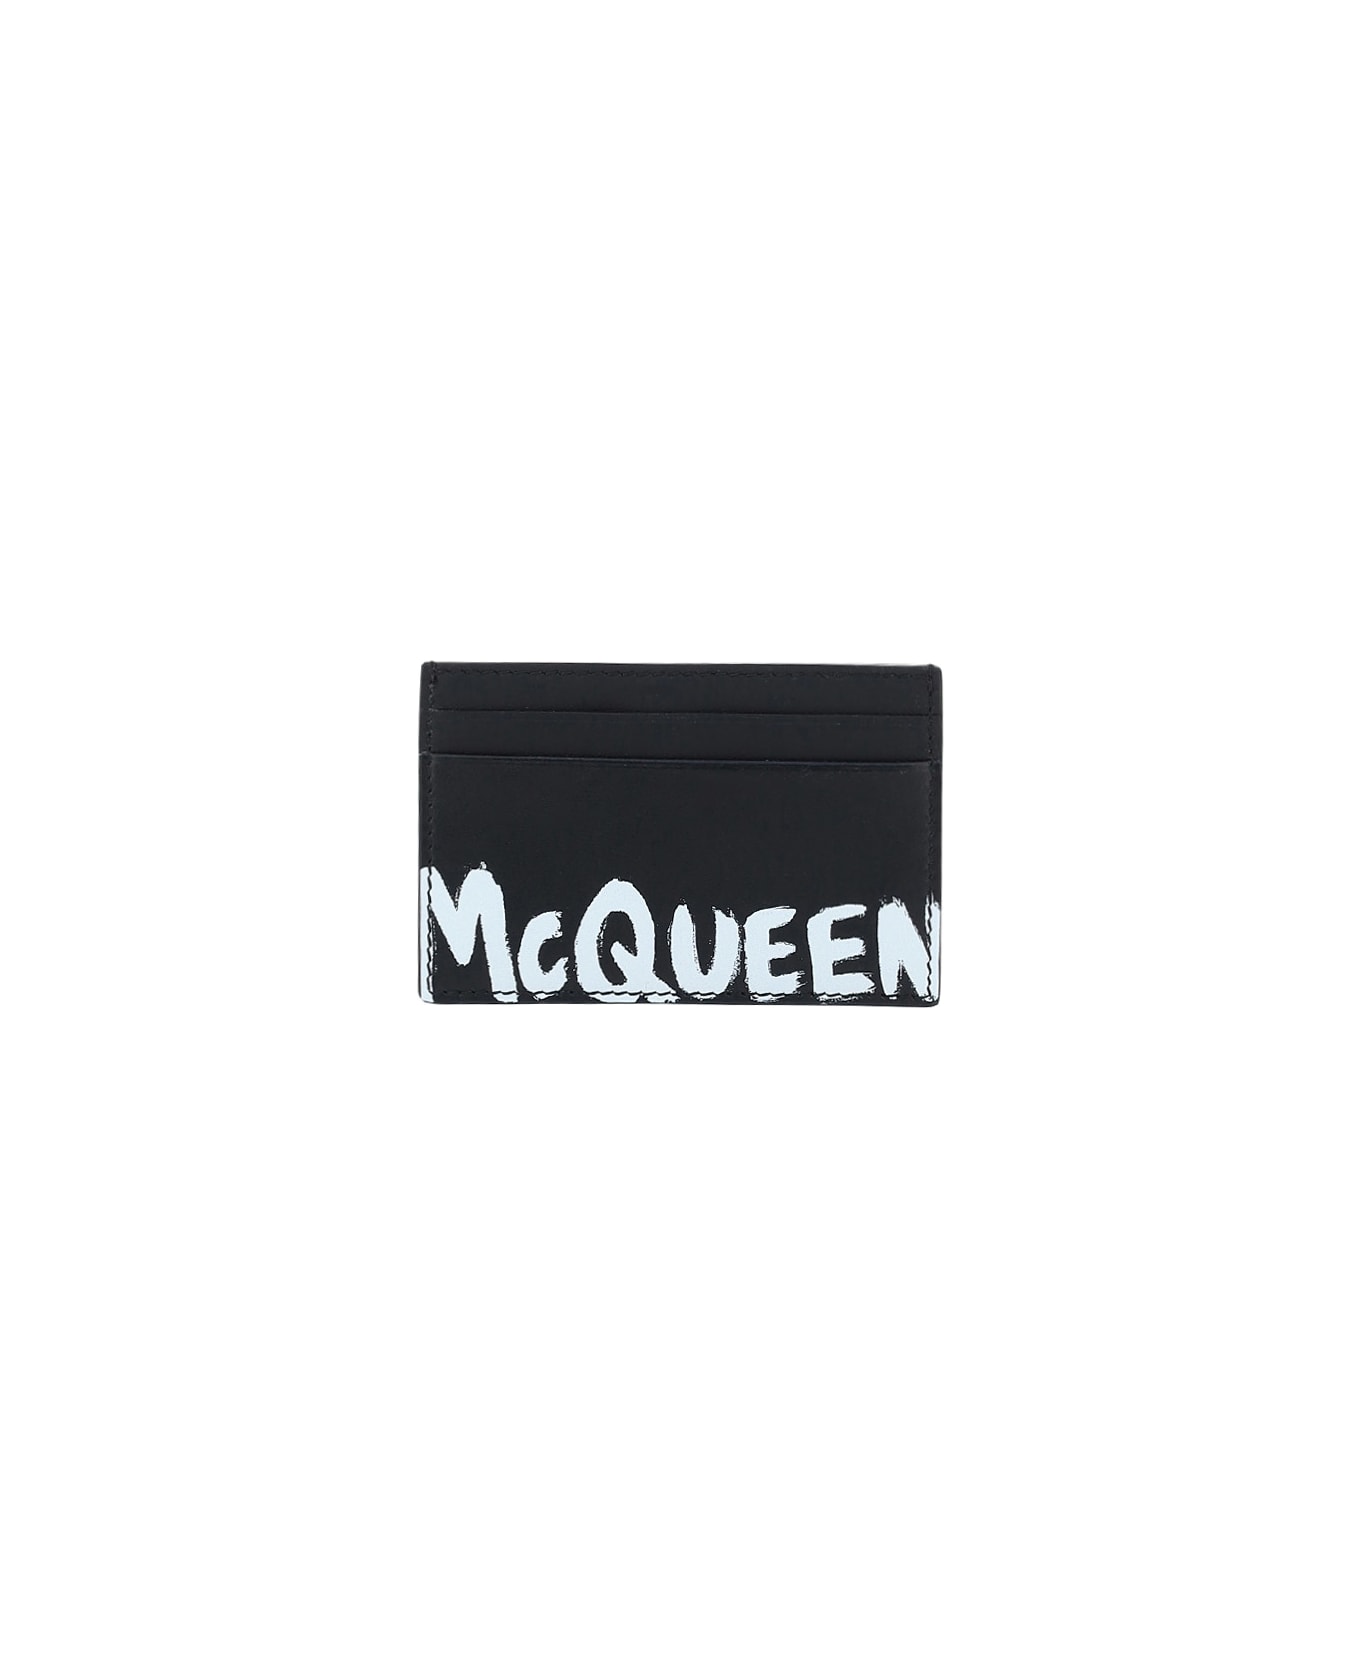 Alexander McQueen Graffiti Print Card Holder - Black/white 財布